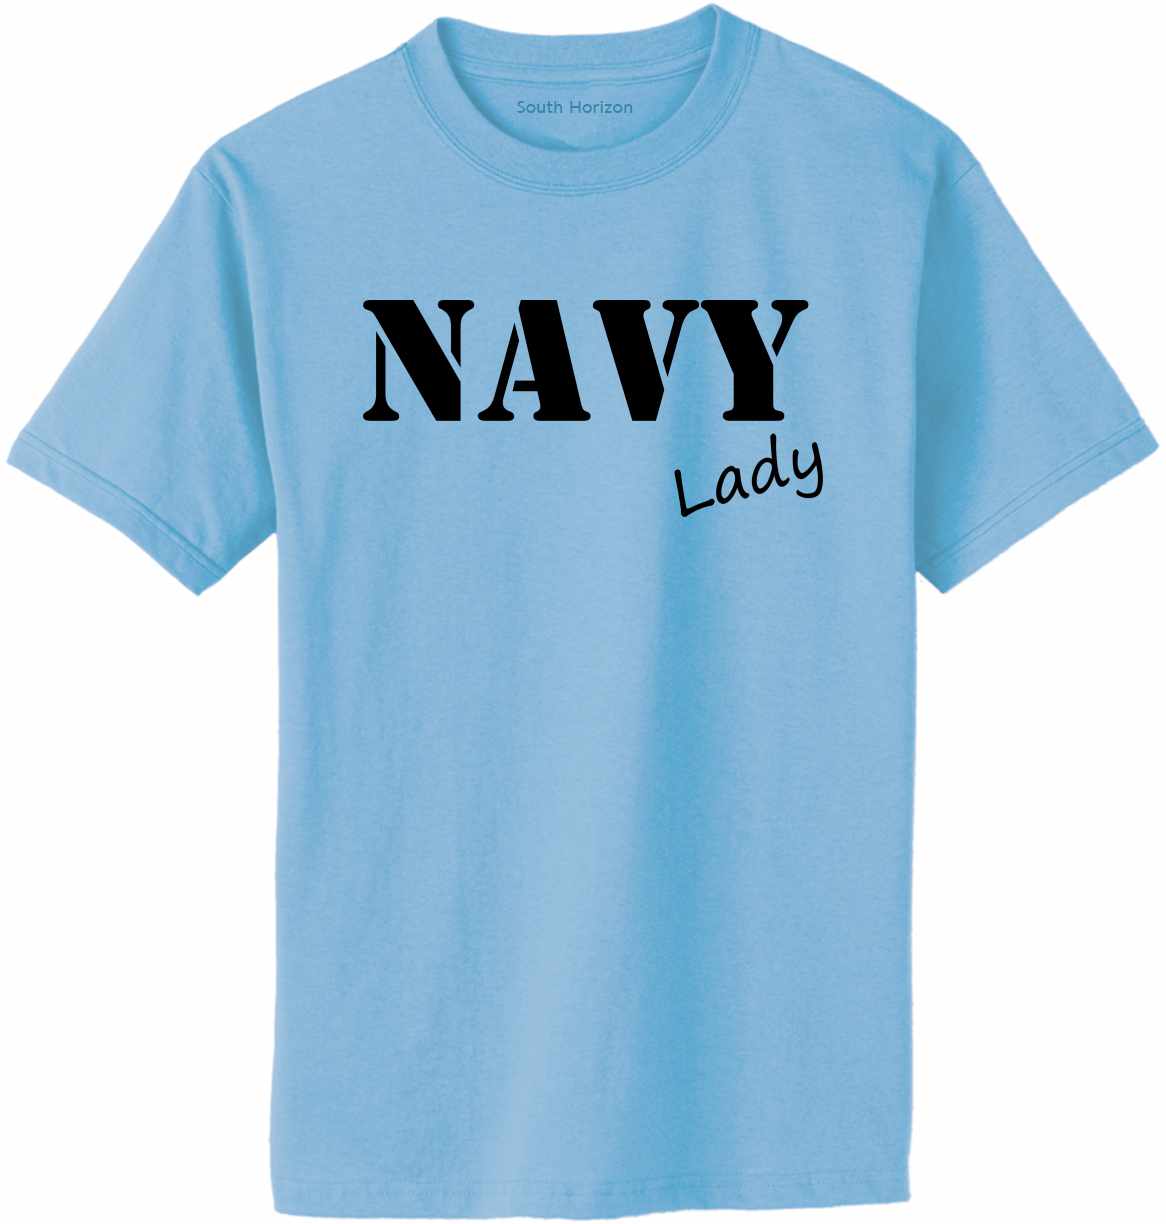 NAVY Lady Adult T-Shirt